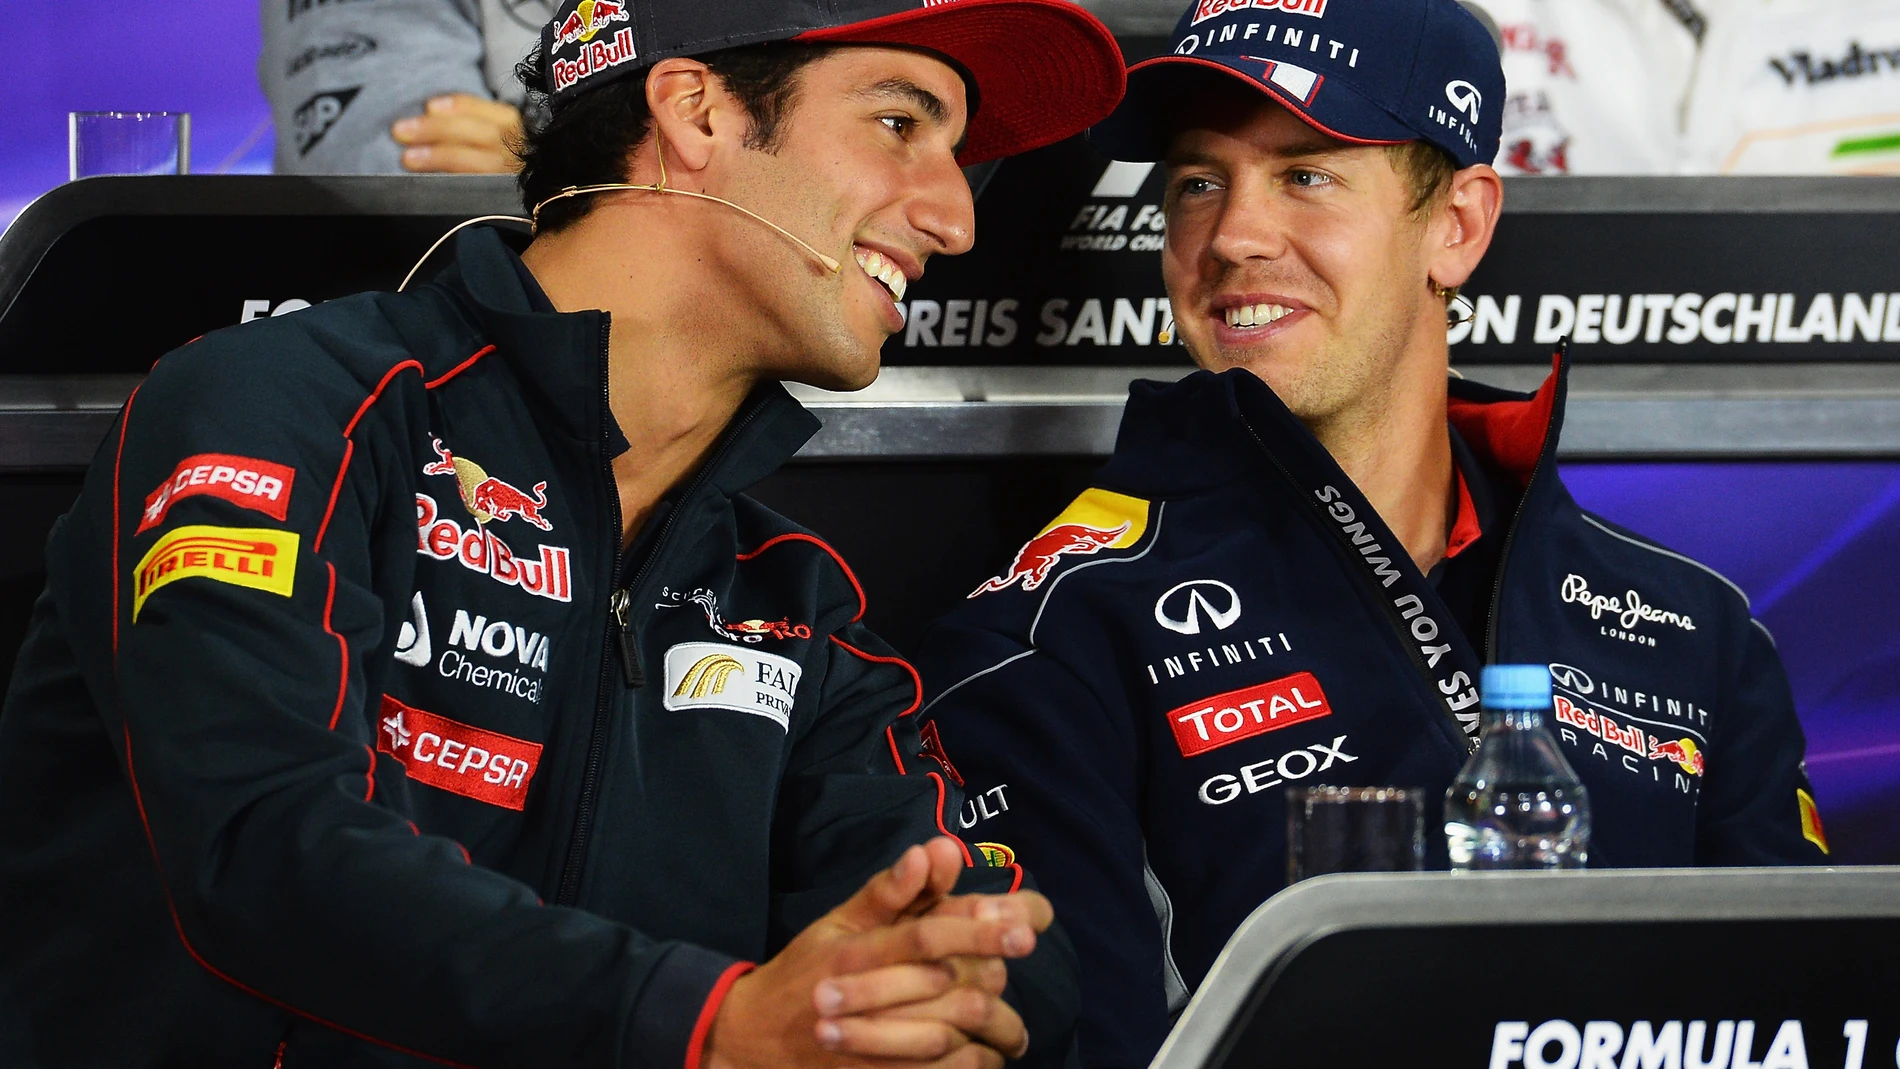 Daniel Ricciardo y Sebastian Vettel